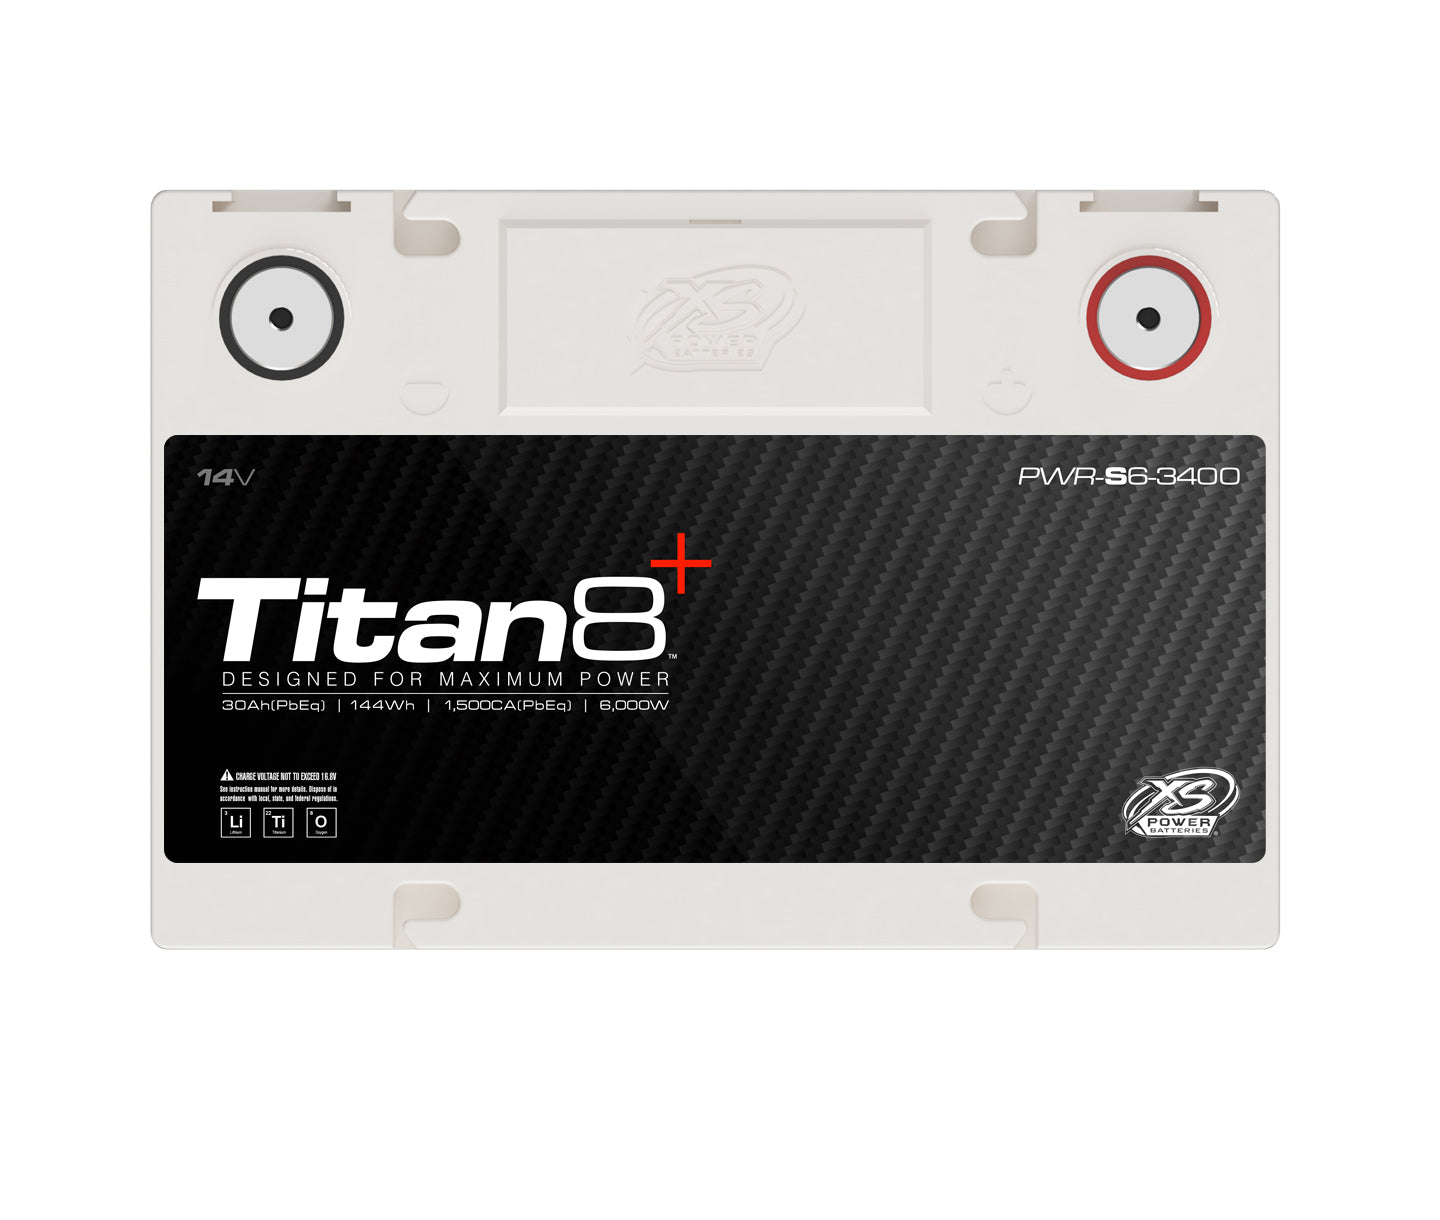 XS Power Titan 8+ 14V PWR-S6-3400 Lithium Titanate Oxide (LTO) Vehicle Battery - 5000W